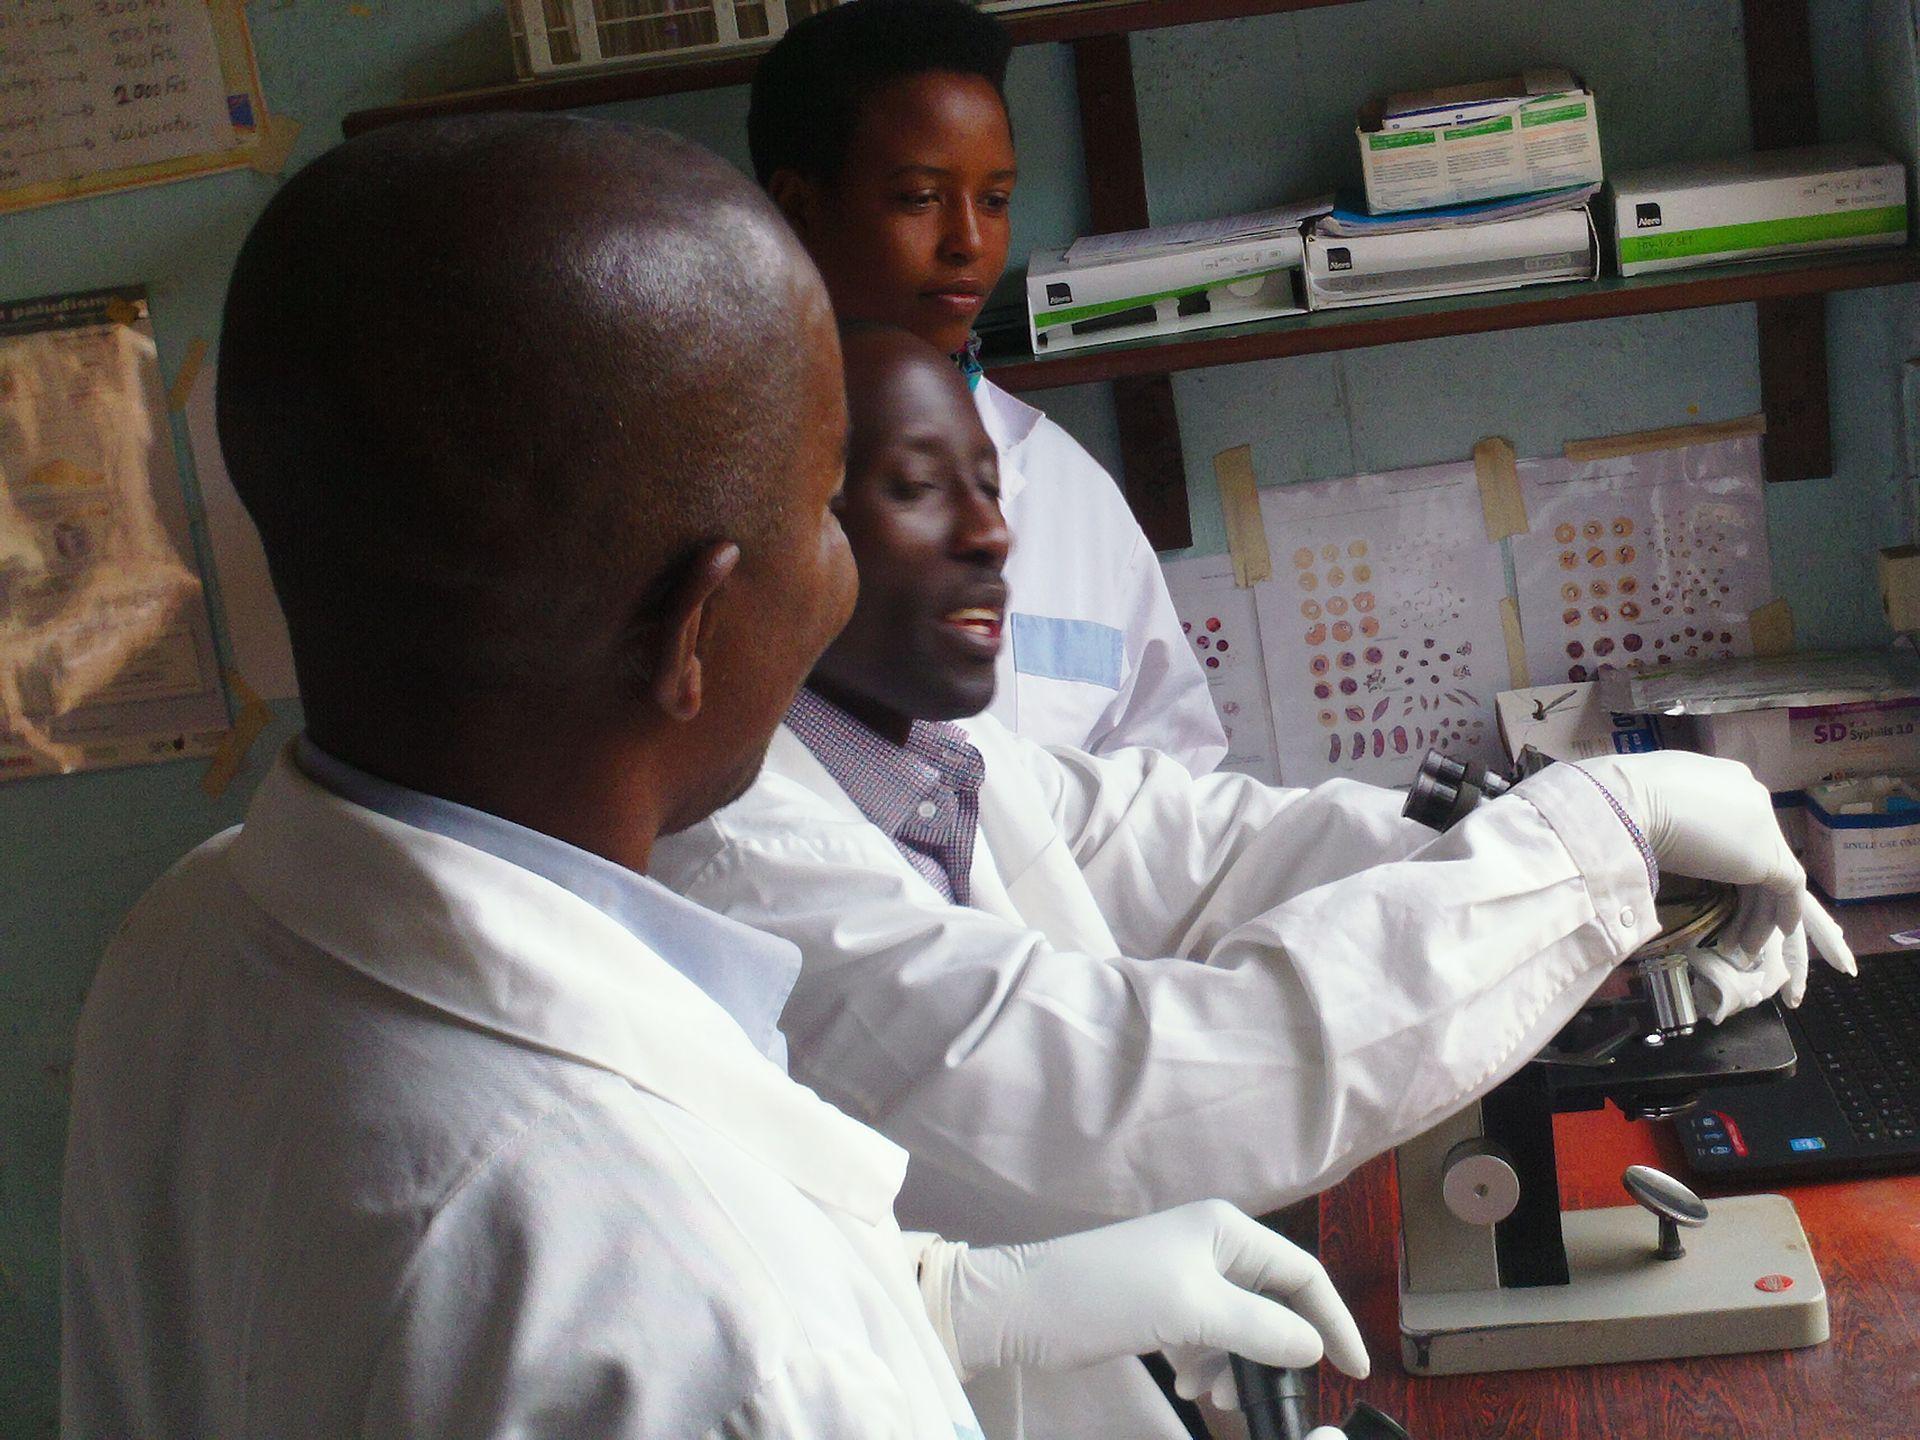 Improving healthcare in Burundi